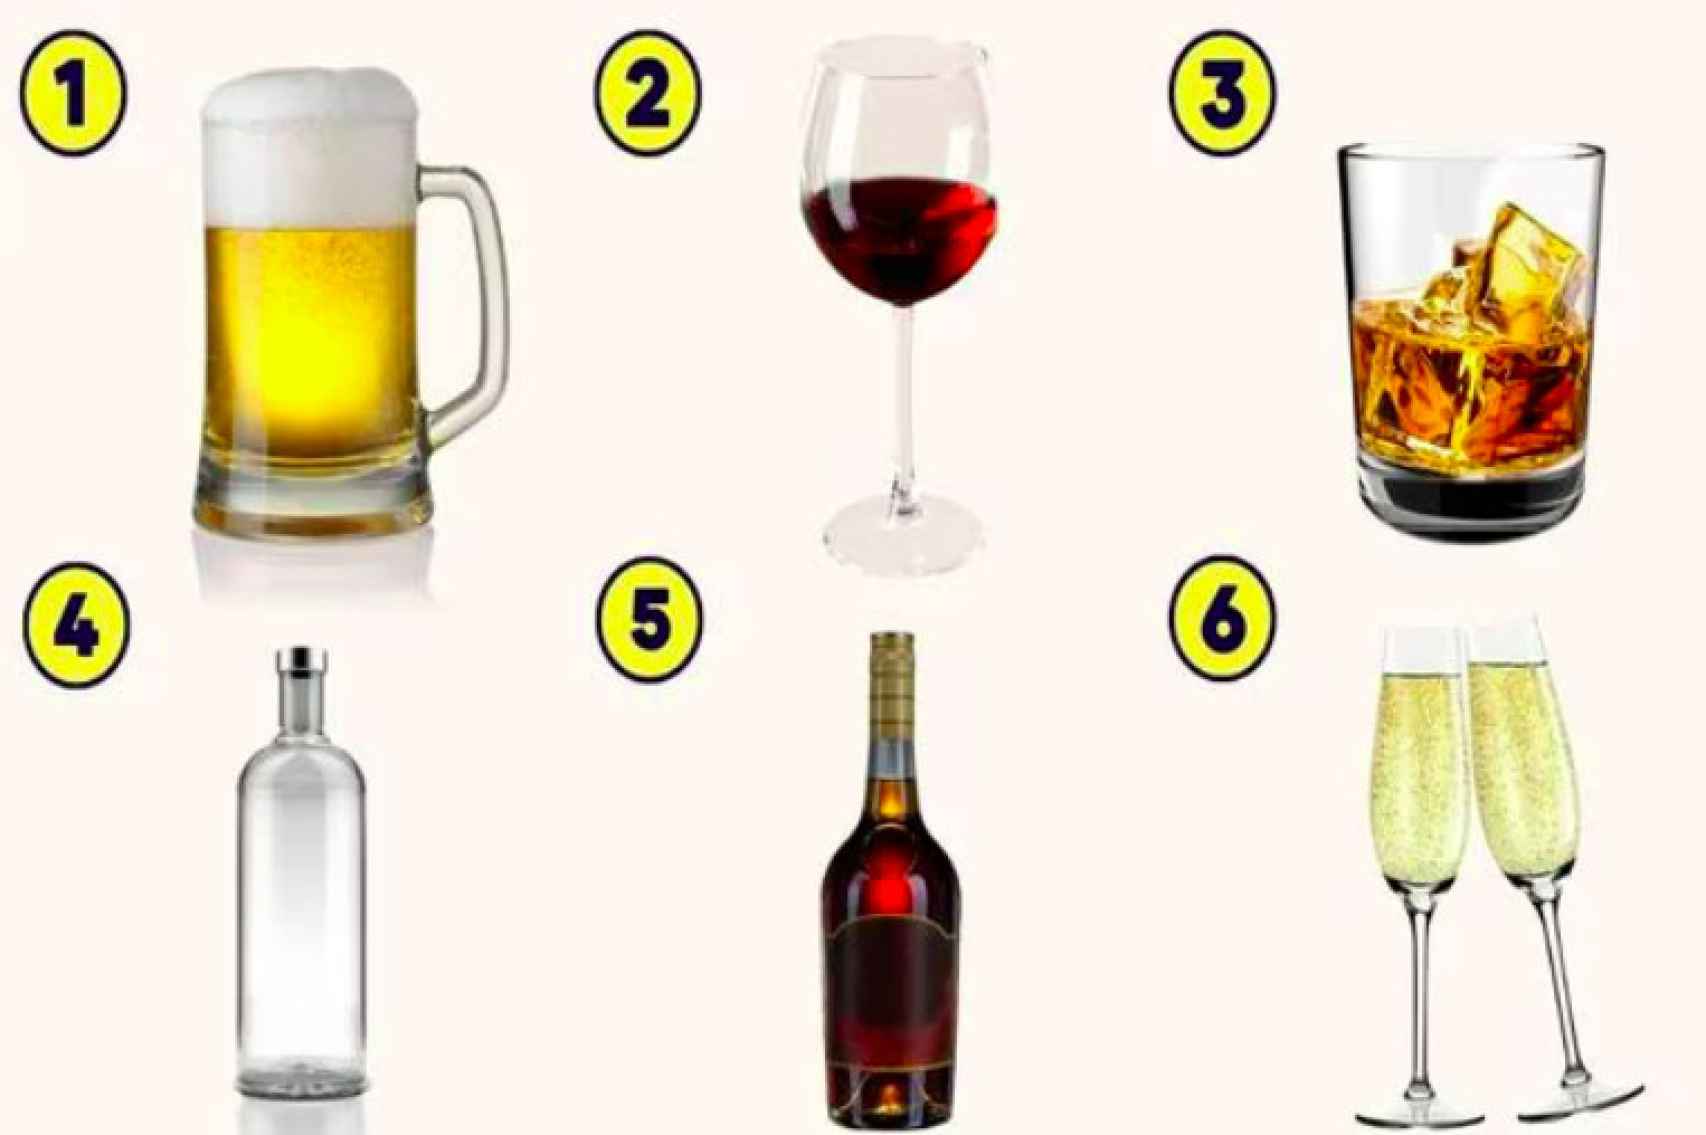 ¿Qué bebida escoges?